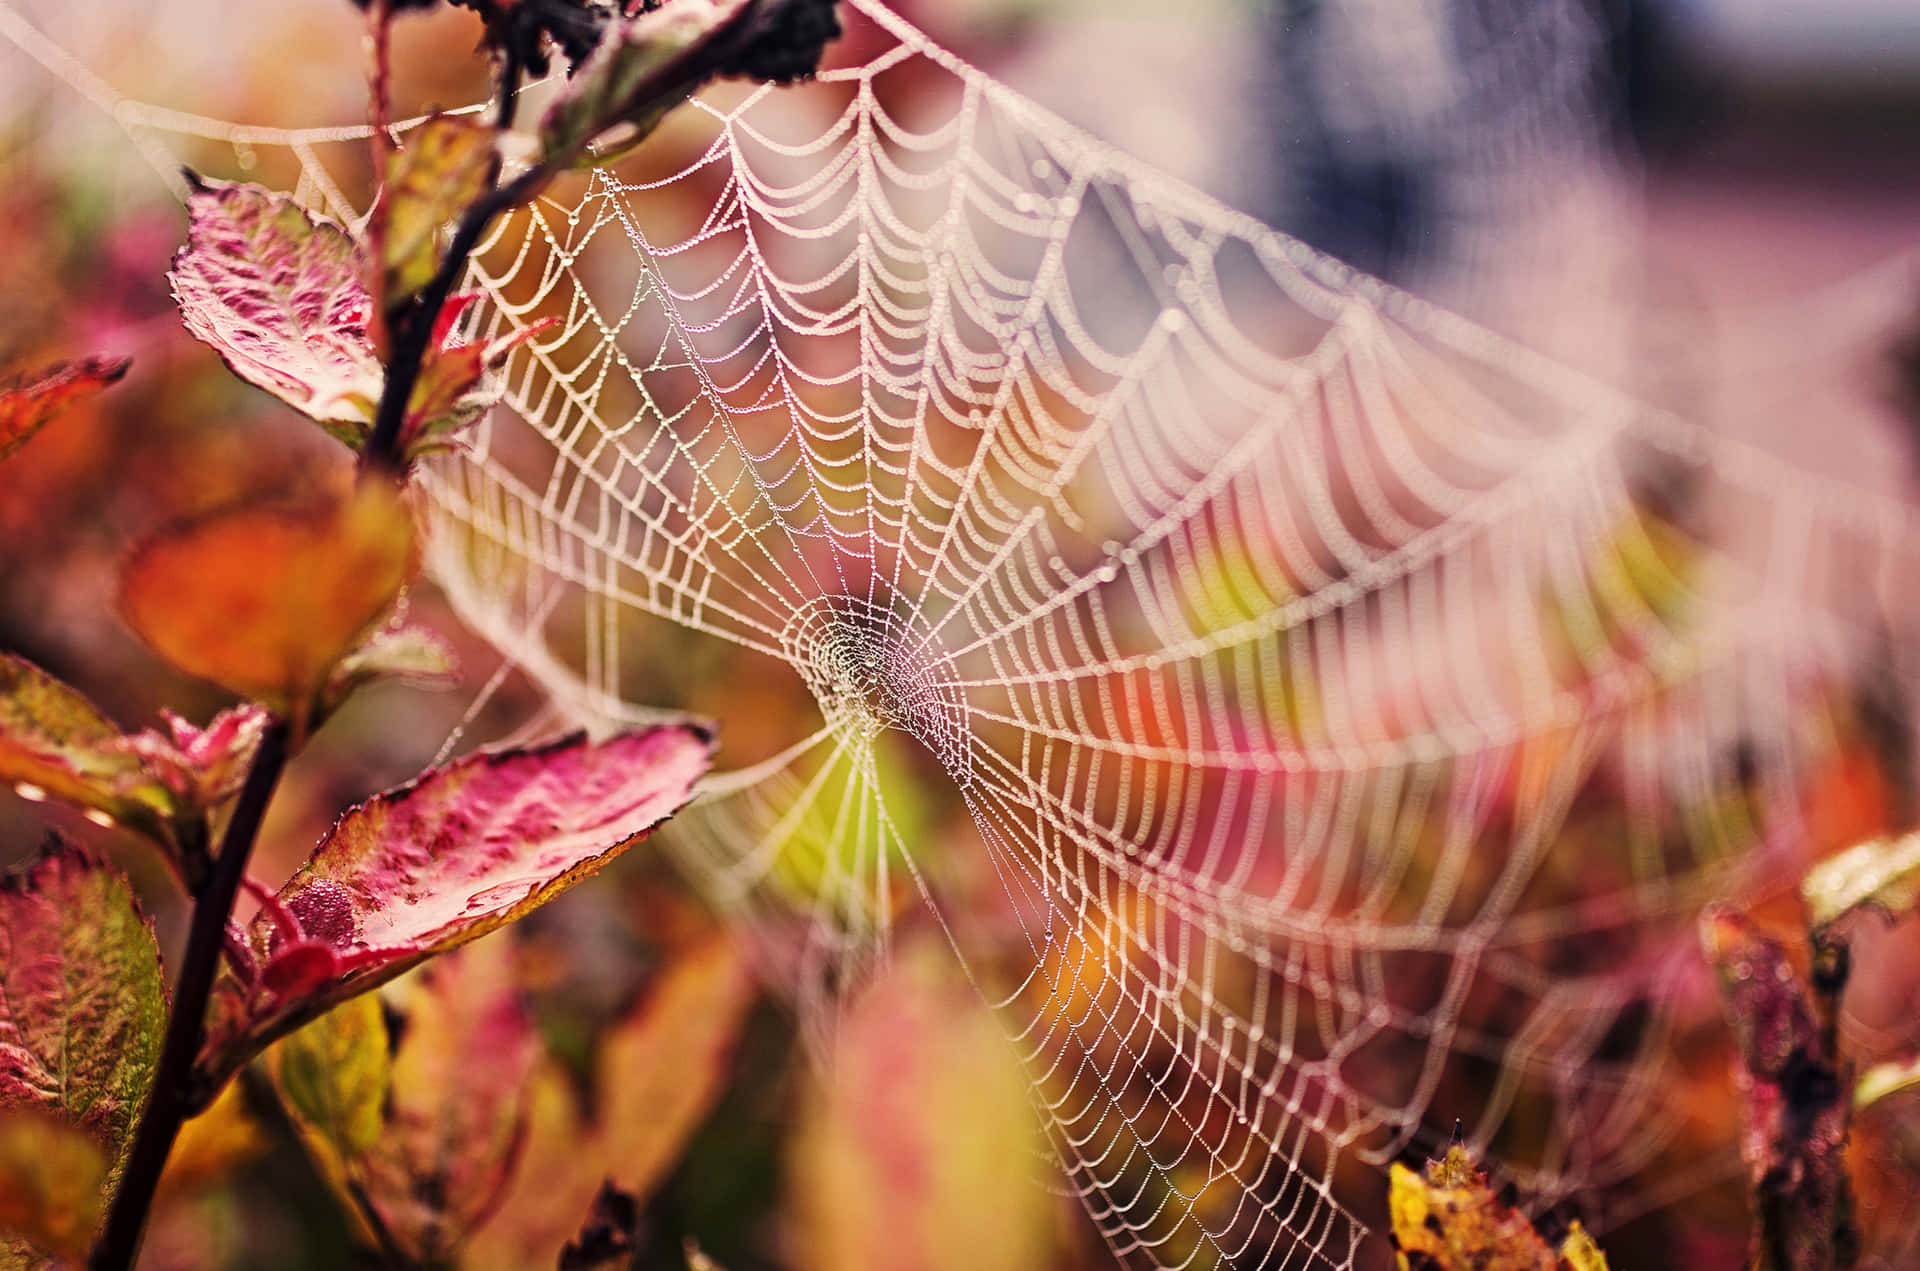 Dewy Spider Web Autumn Leaves.jpg Wallpaper